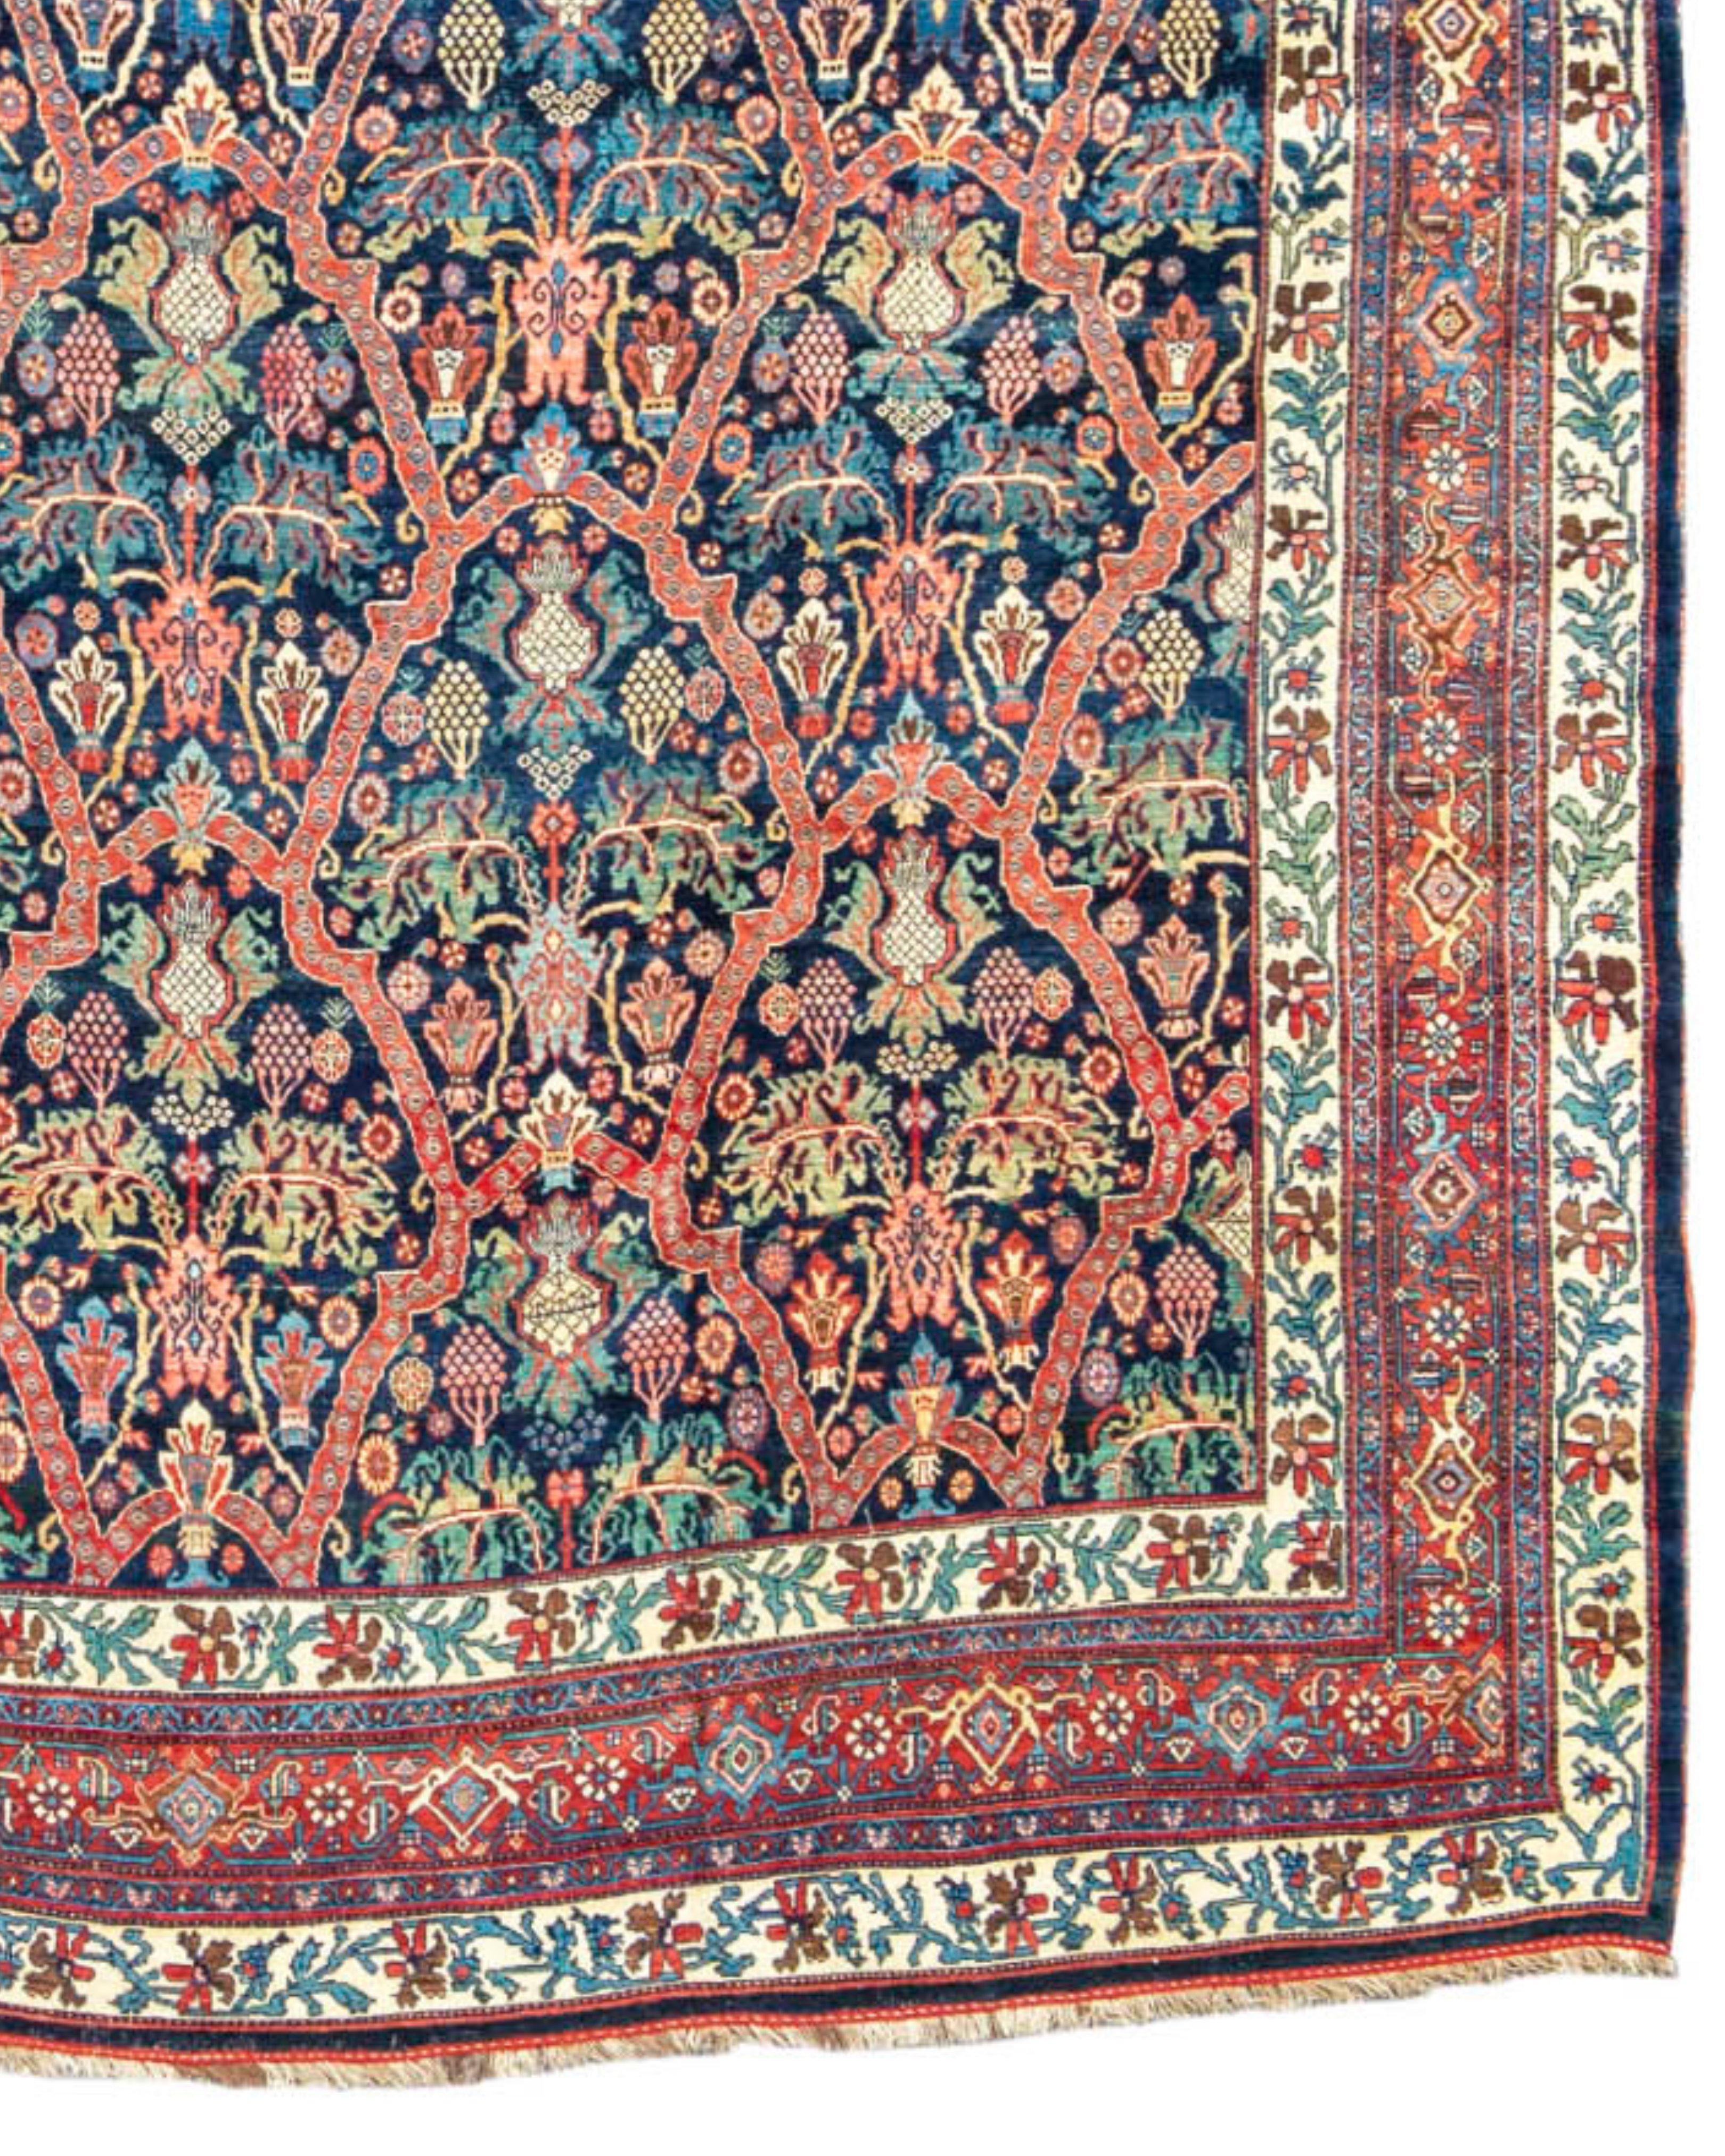 Large Antique Bidjar Carpet, Late 19th Century

Ex. John Collins Jr. collection.

Additional Information:
Dimensions: 11'9